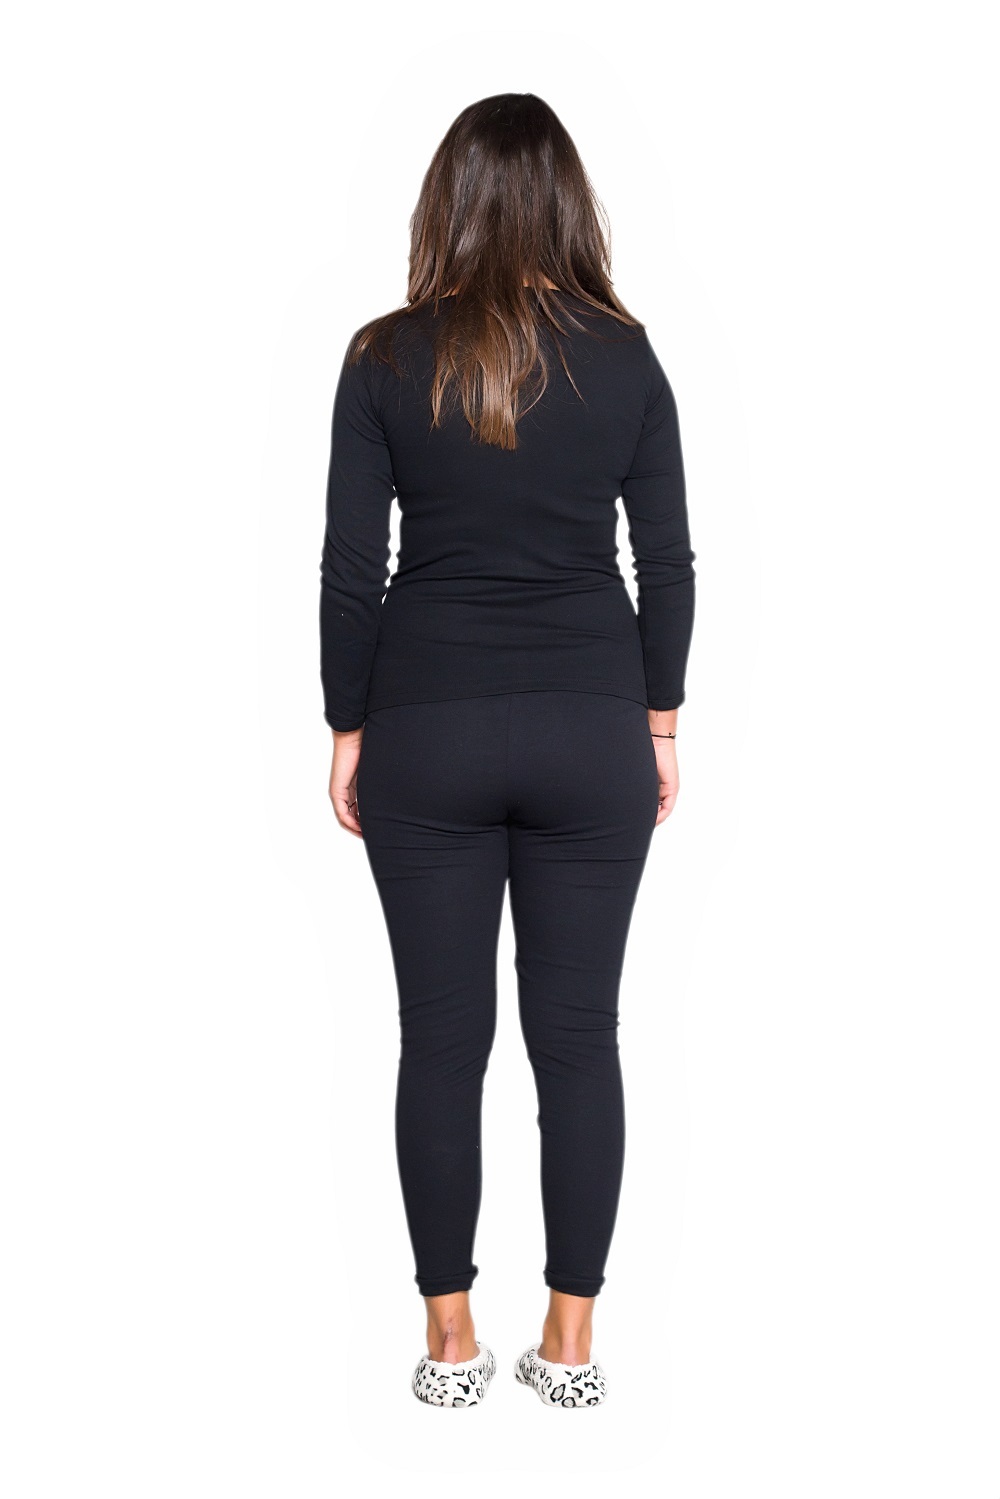 Ladies Black Cotton Blend Thermal Underwear Spencer Long Sleeve & Pants Set